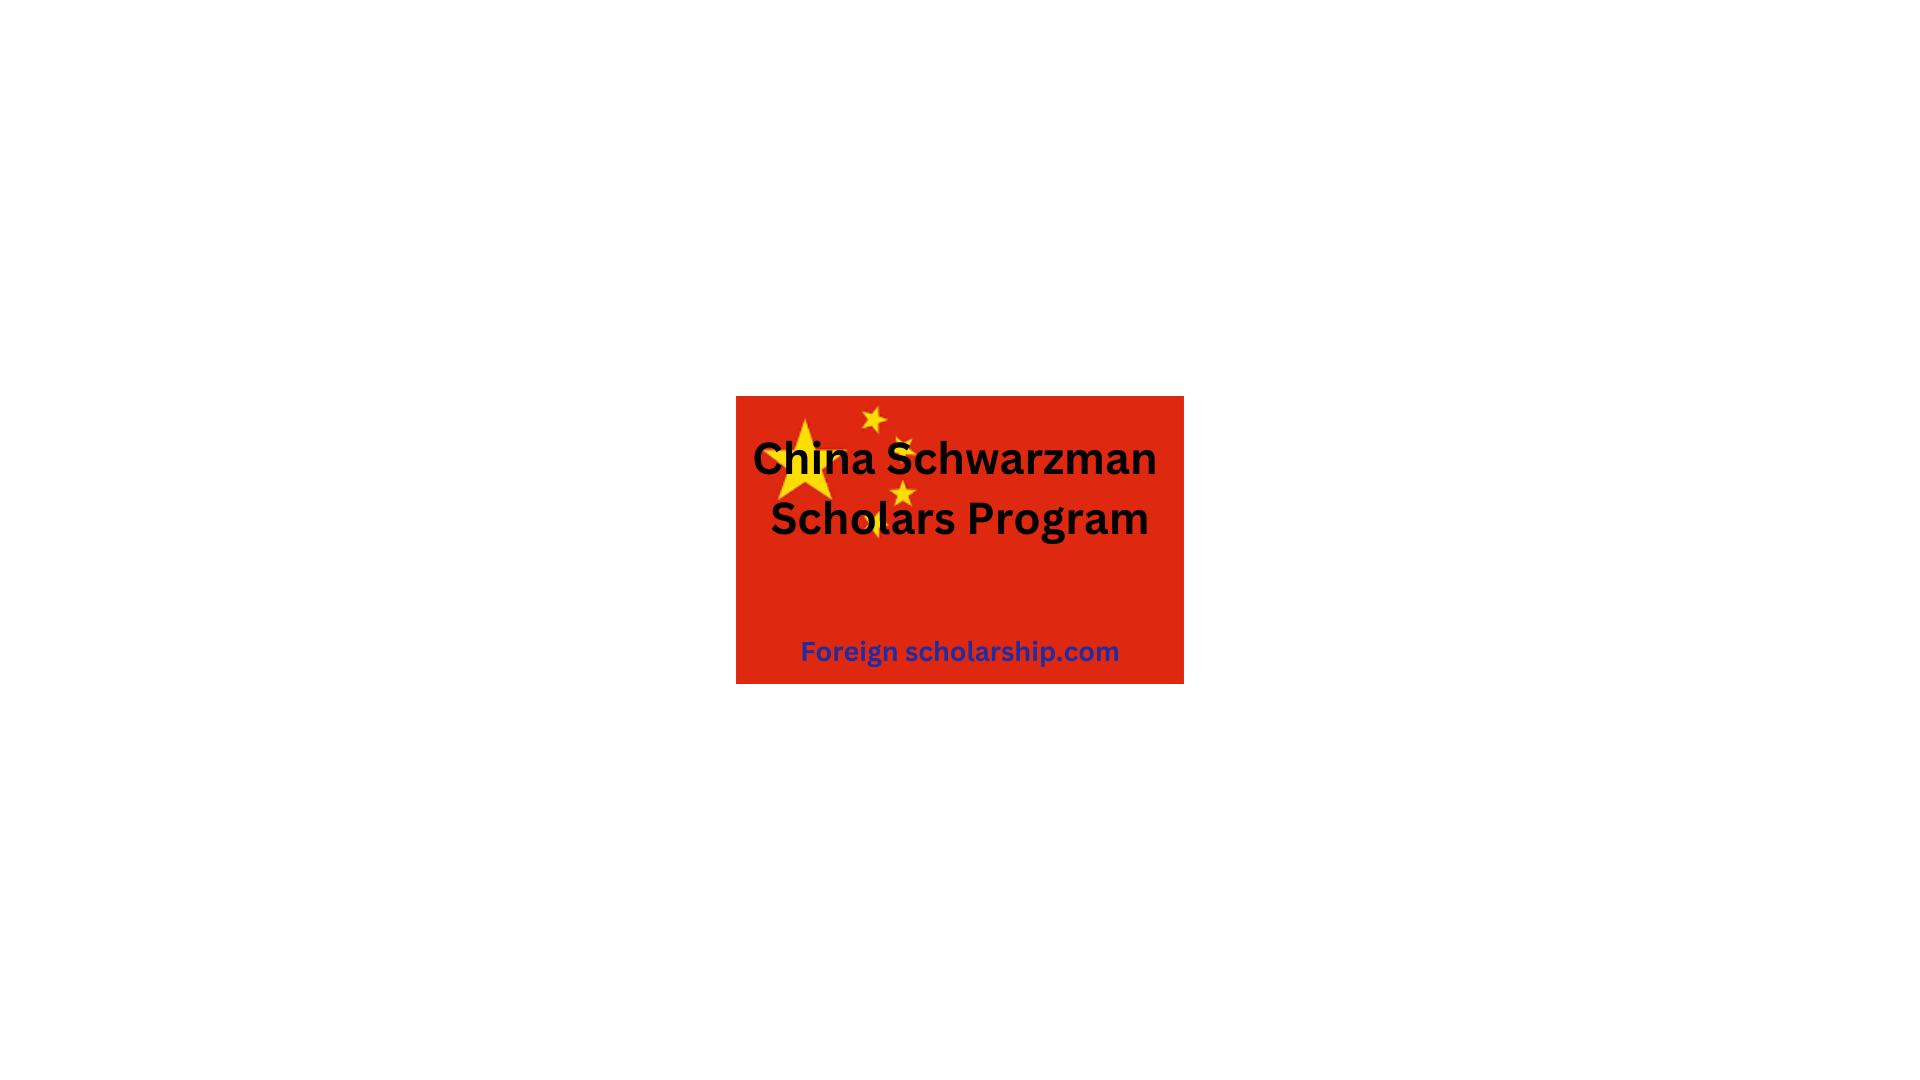 China Schwarzman Scholars Program